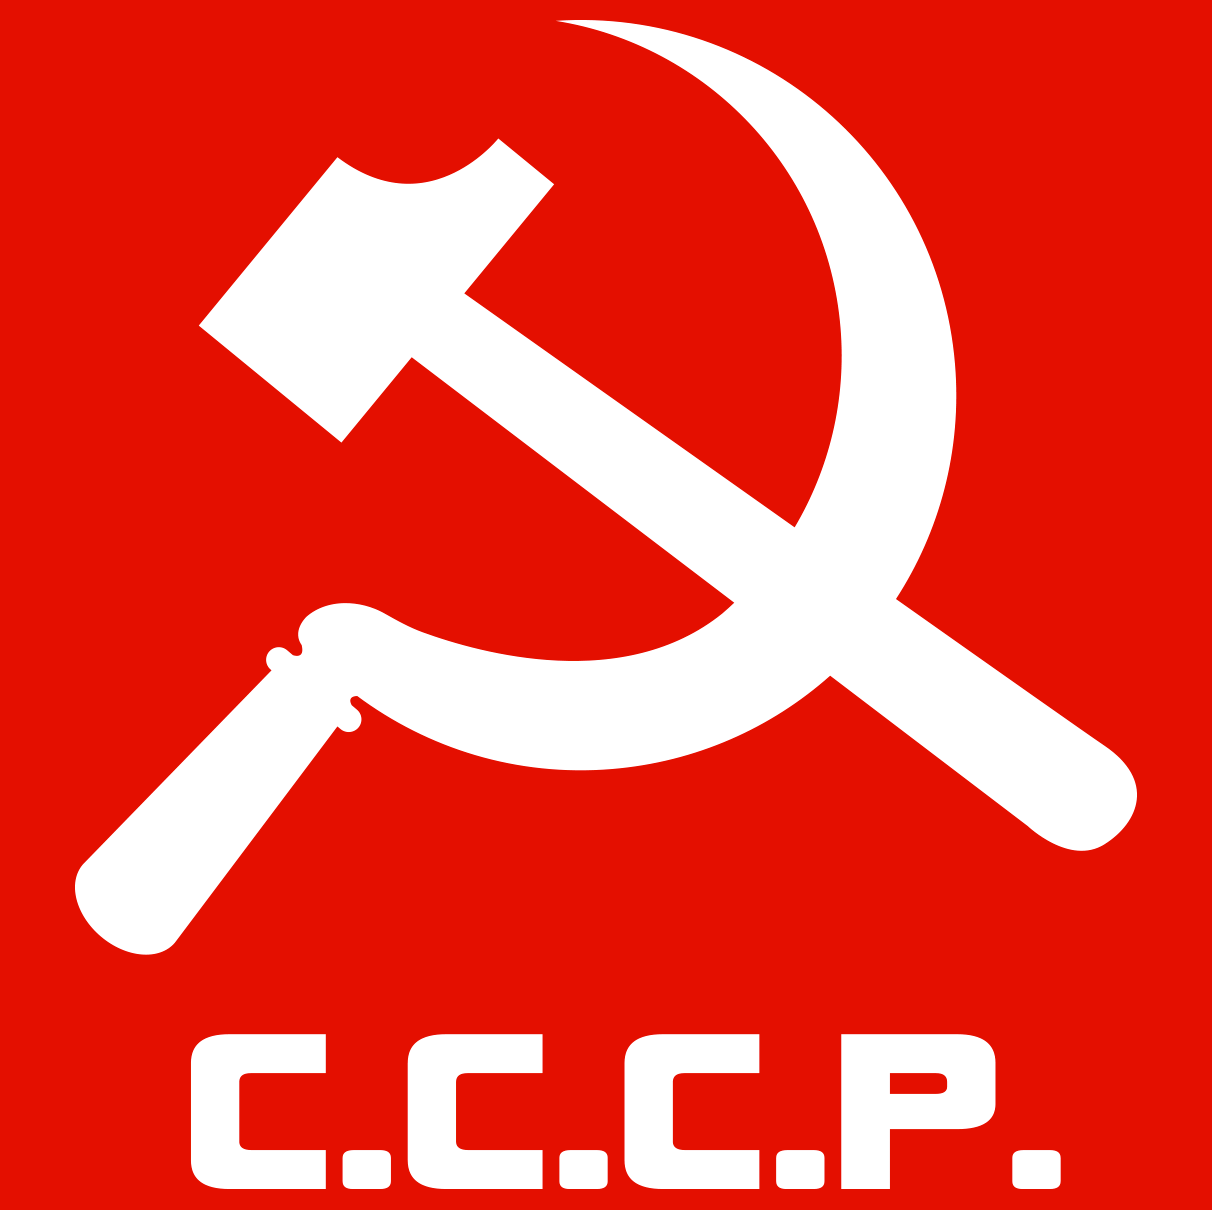 T-shirt CCCP rouge